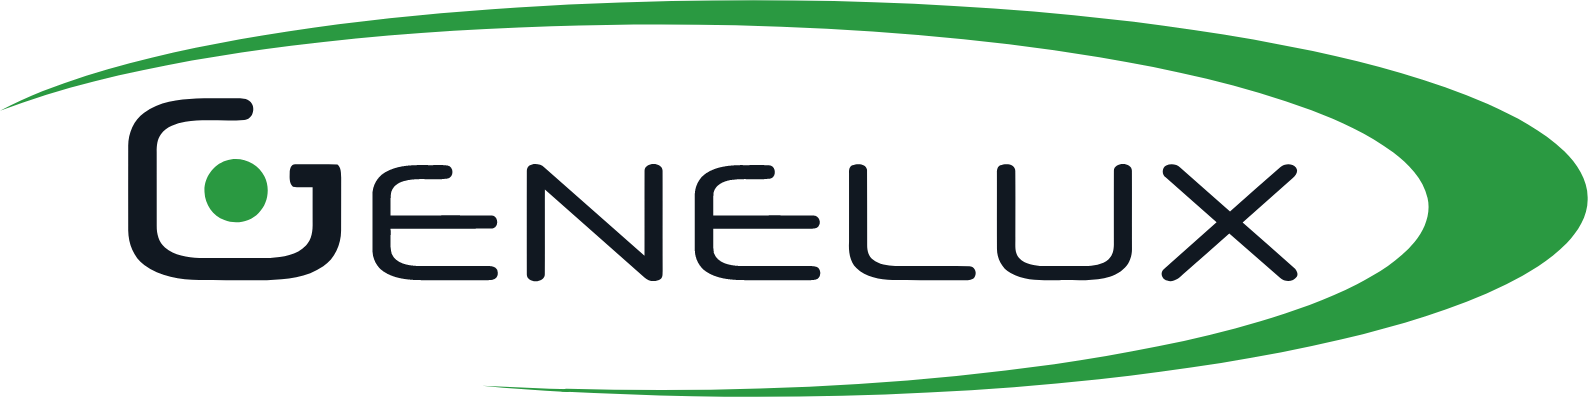 Genelux logo large (transparent PNG)